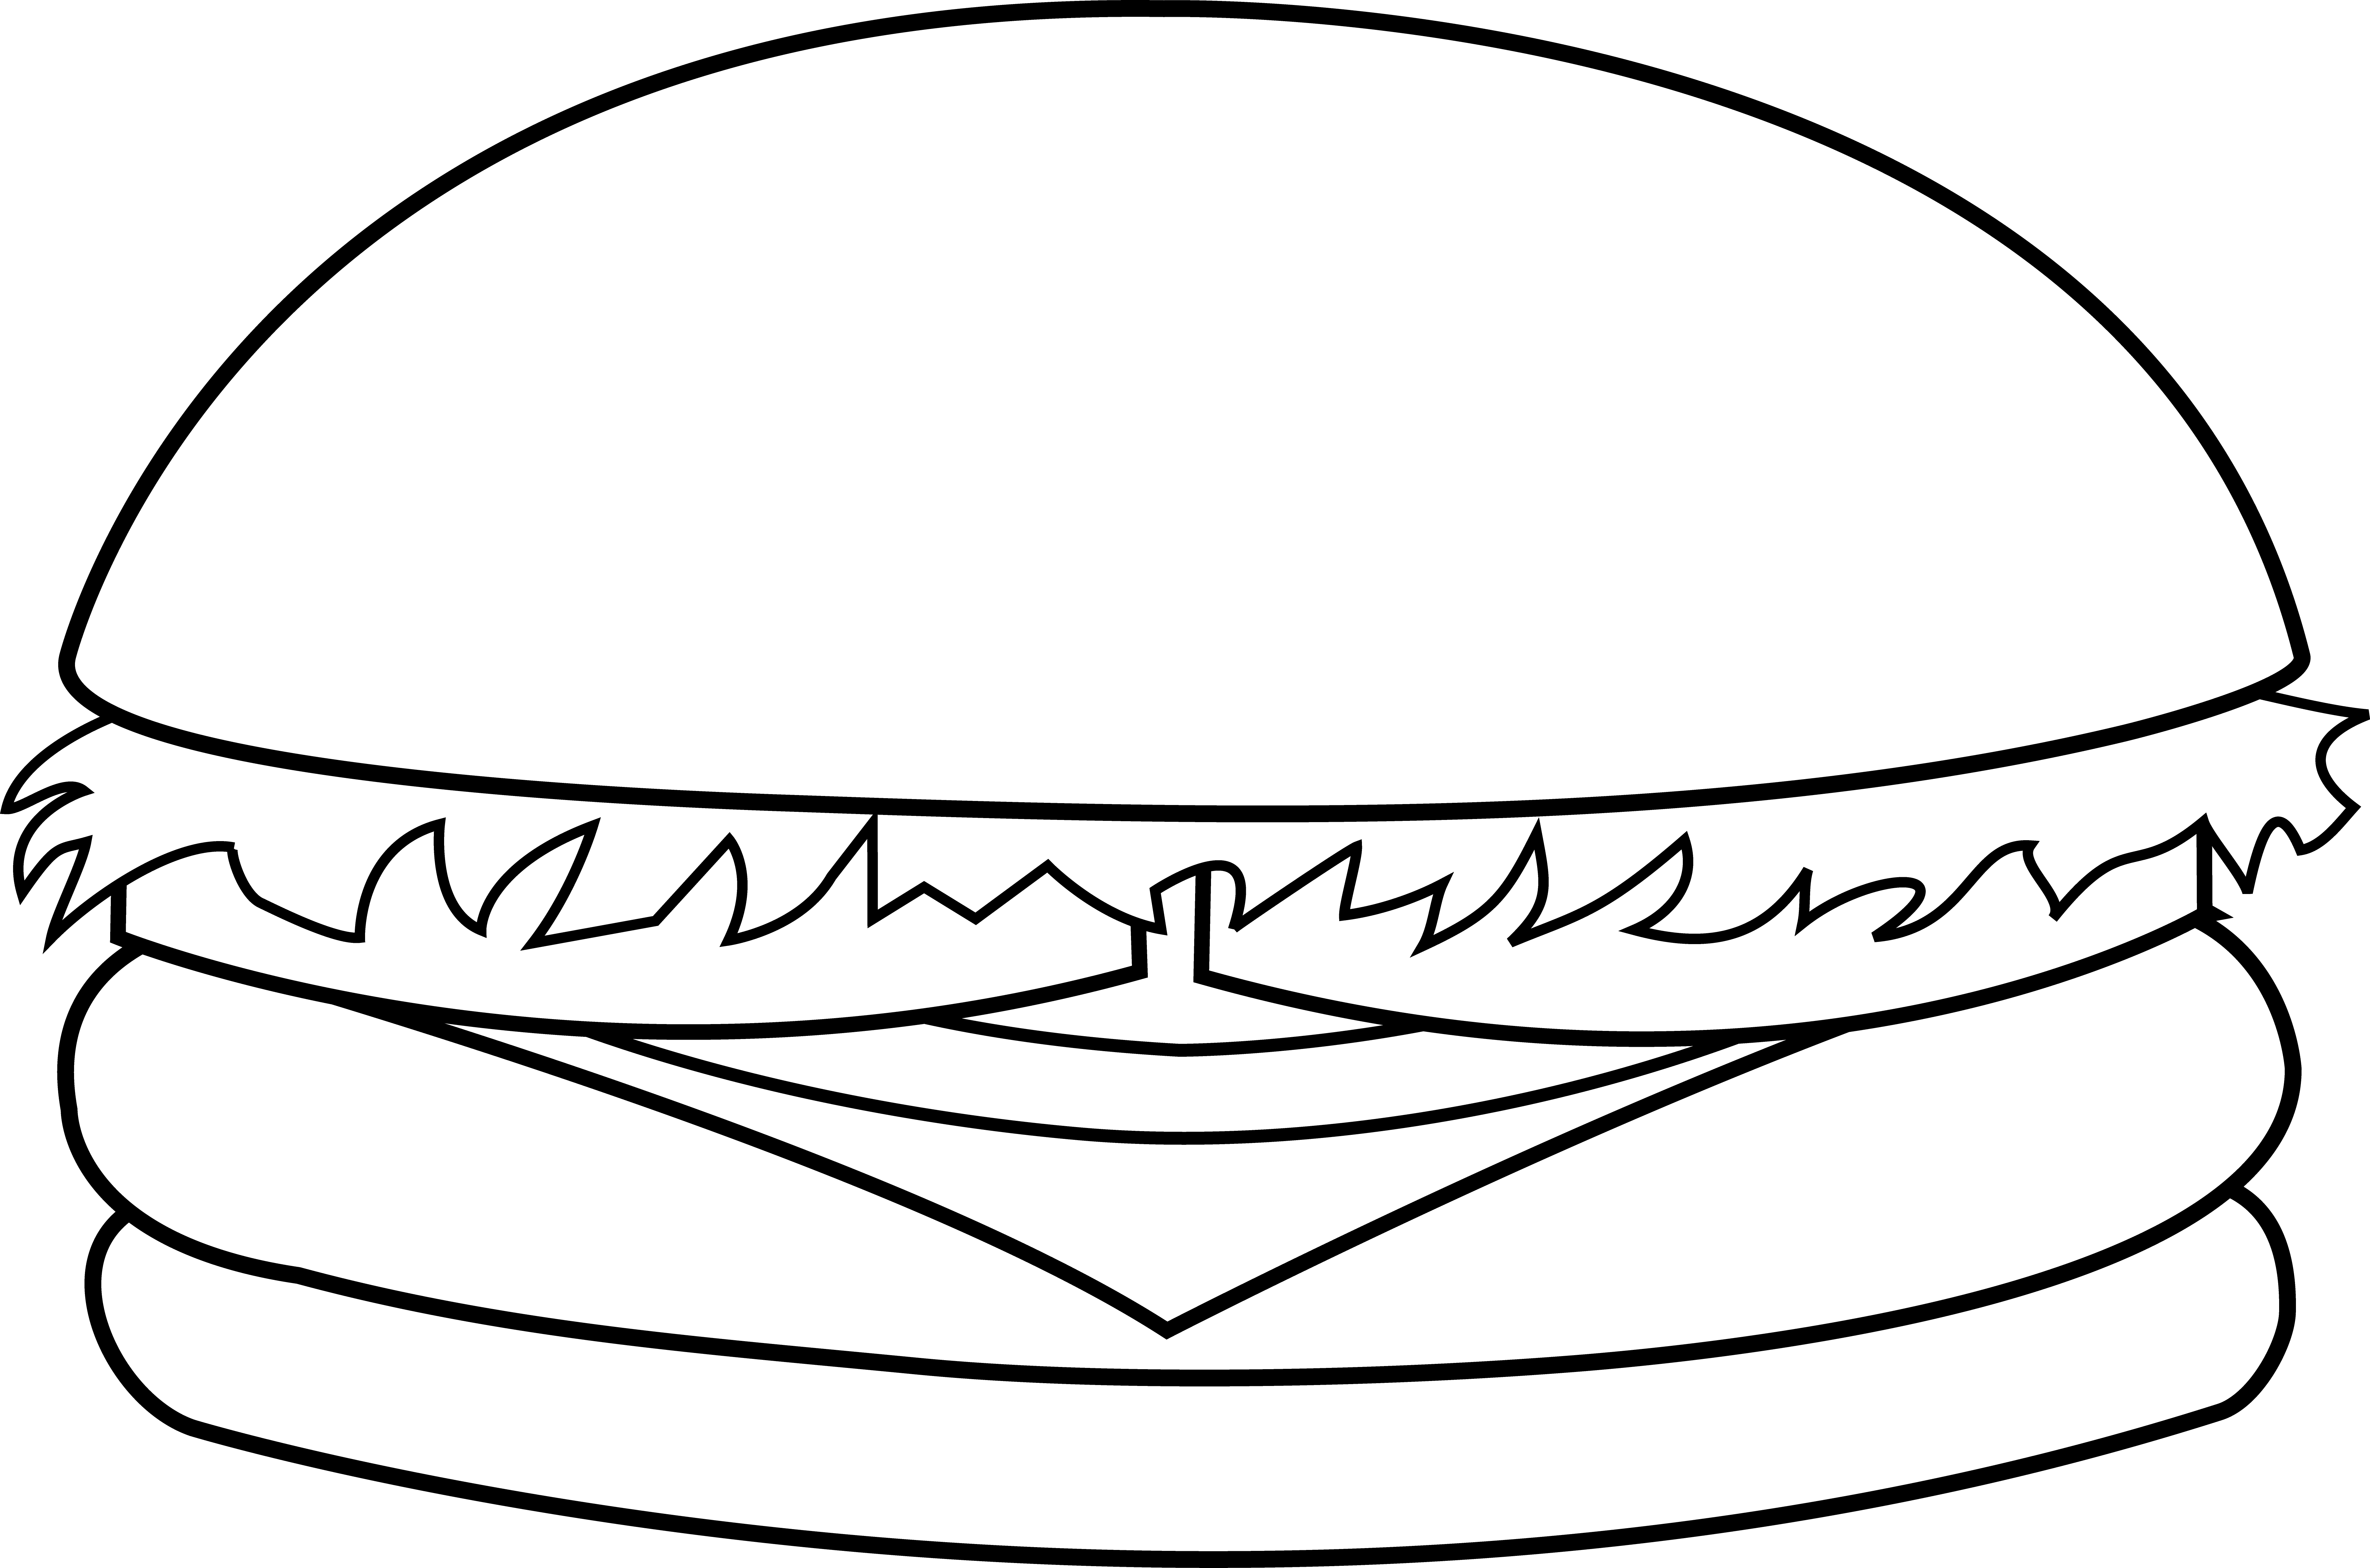 Hamburger cartoon burger image. Fries clipart drawn